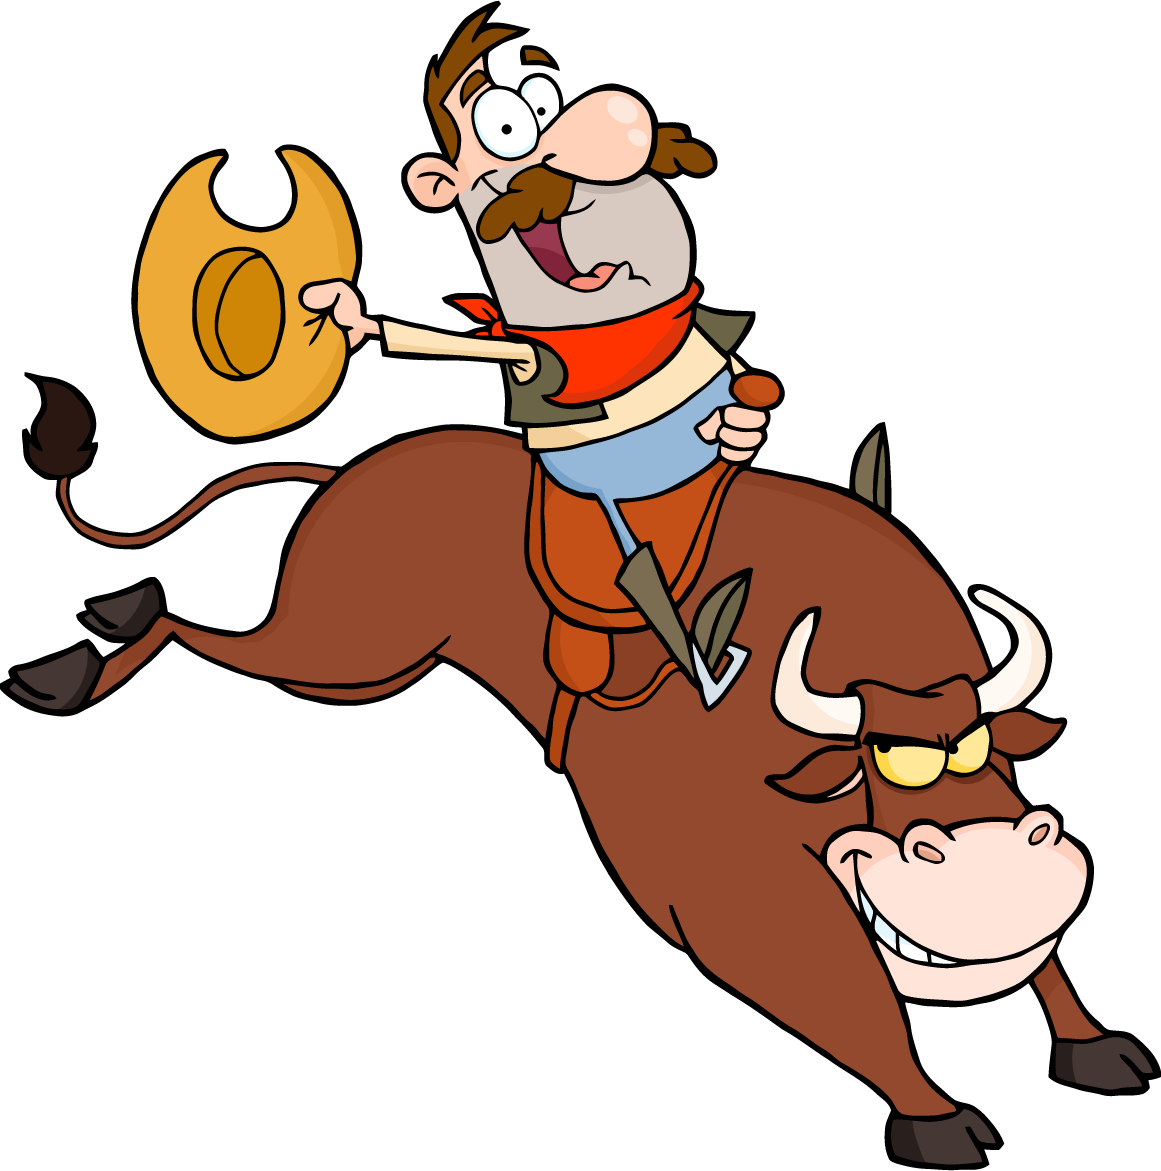 Rodeo bull rider attacked slo